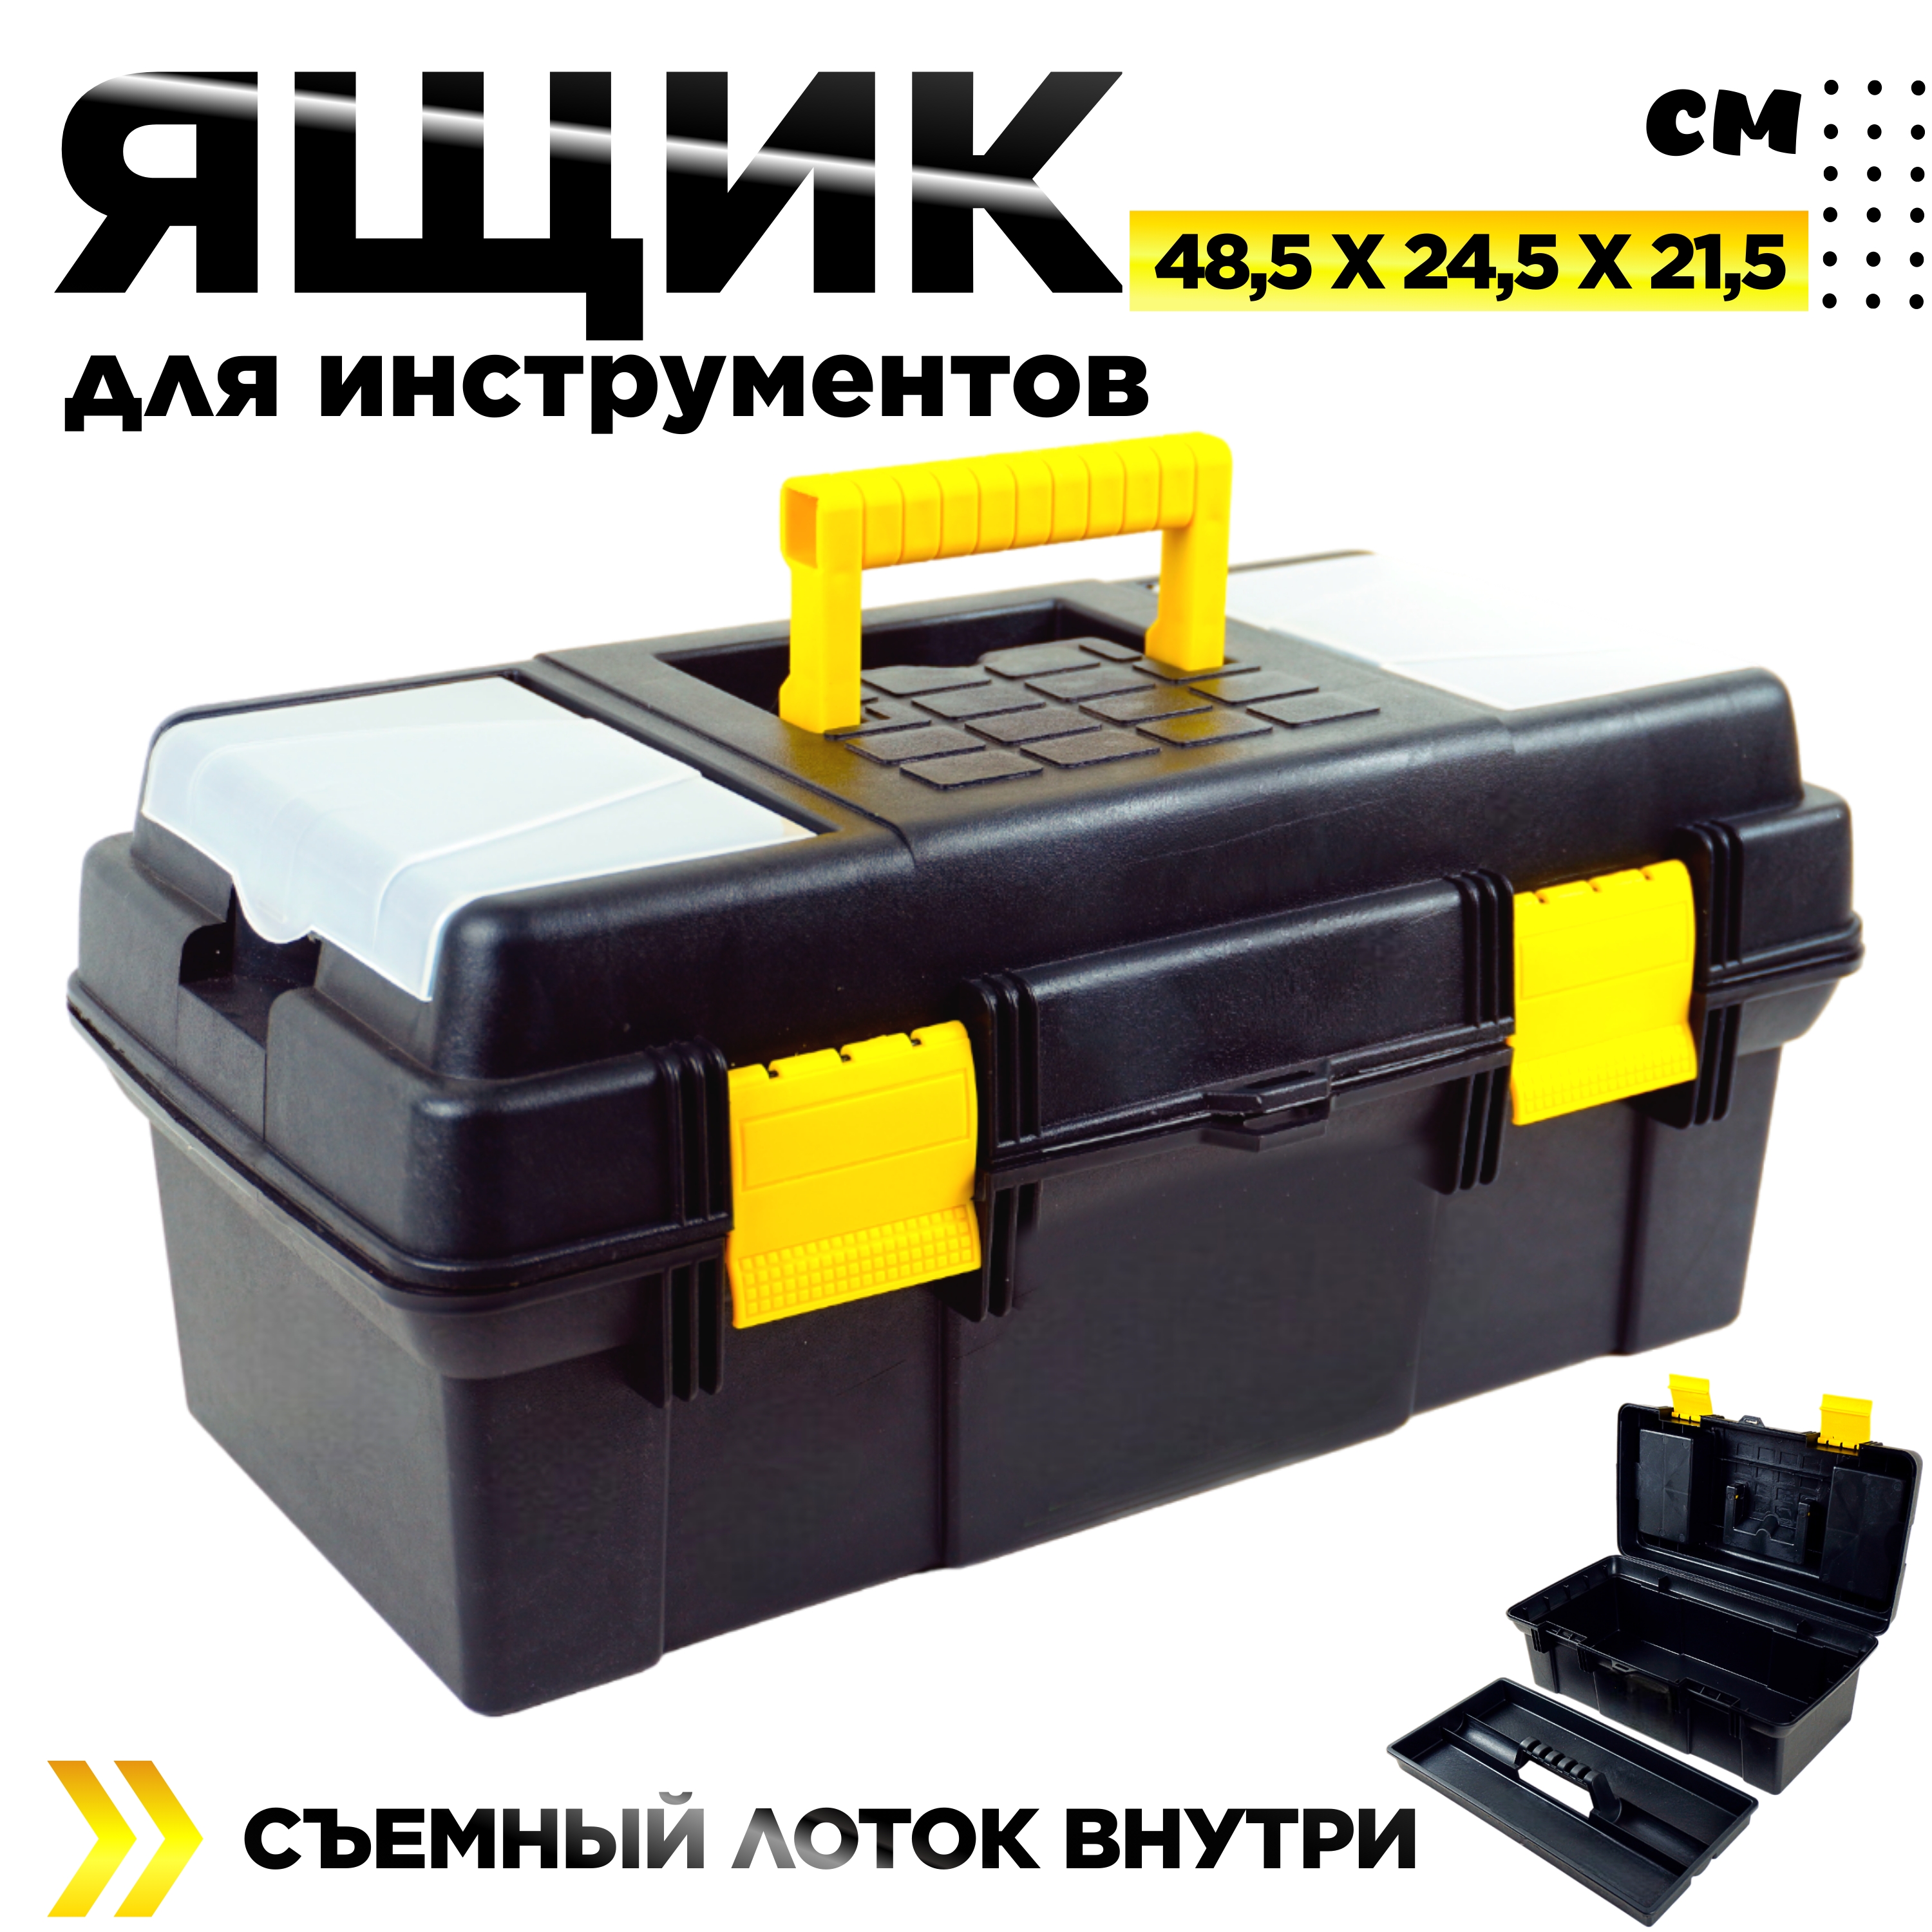 Ящик для инструментов Дельта Мастер 19 дюймов 485 х 245 х 215 мм ящик для инструментов дельта эксперт 22 дюйма 565 х 325 х 290 мм